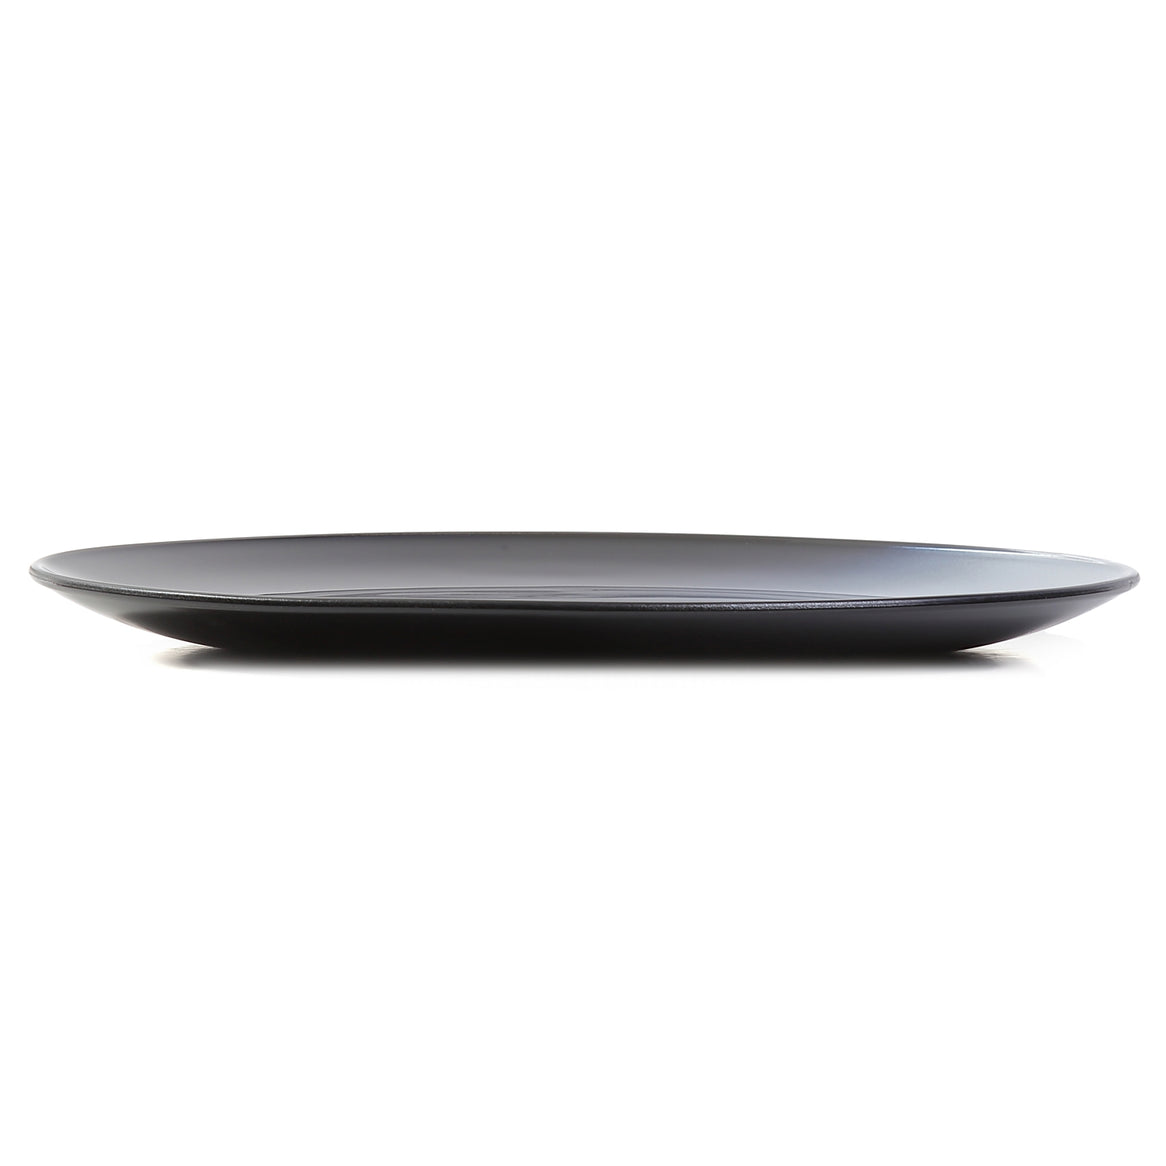 Syosaku Japanese Urushi Glass Flat Dinner Plate 11-inch (28cm) Gradation Black, Dishwasher Safe - Syosaku-Japan